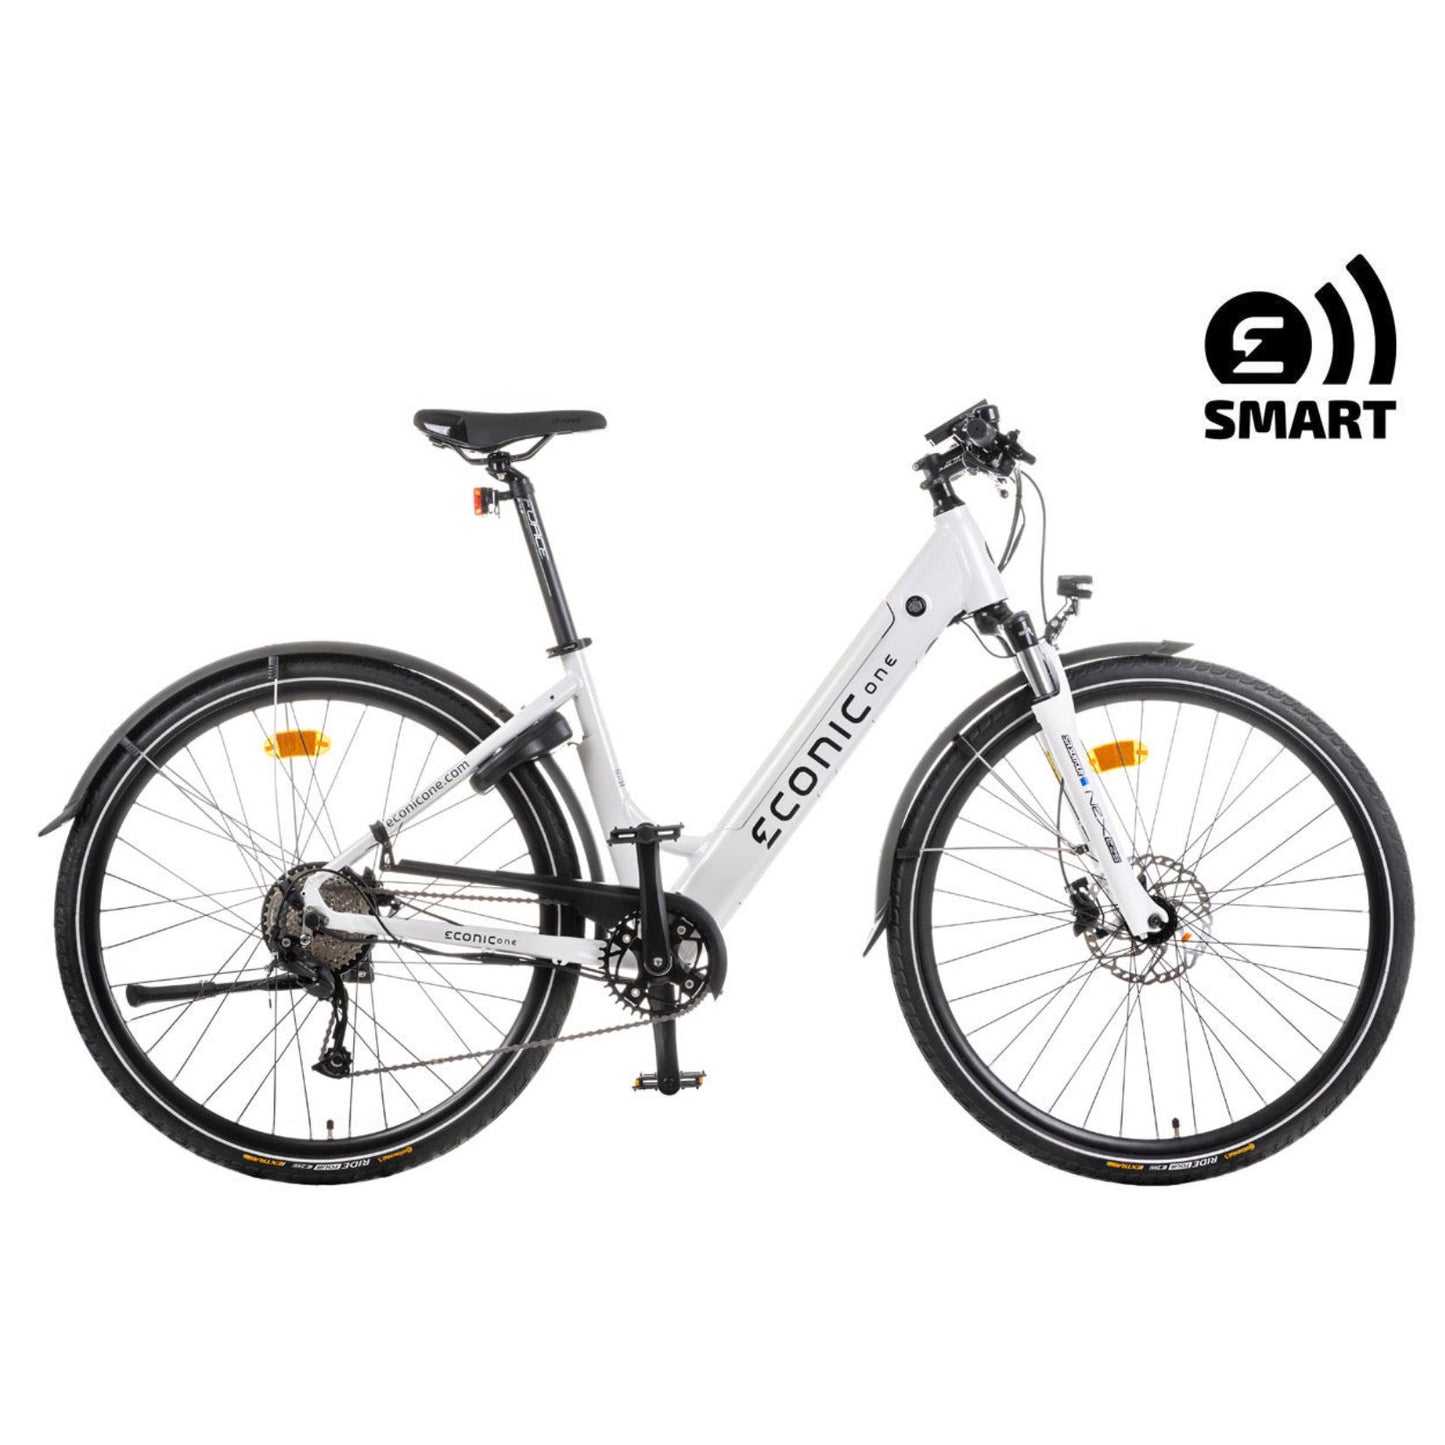 ECONIC ONE SMART Comfort | Commute e-Bike | 100 km